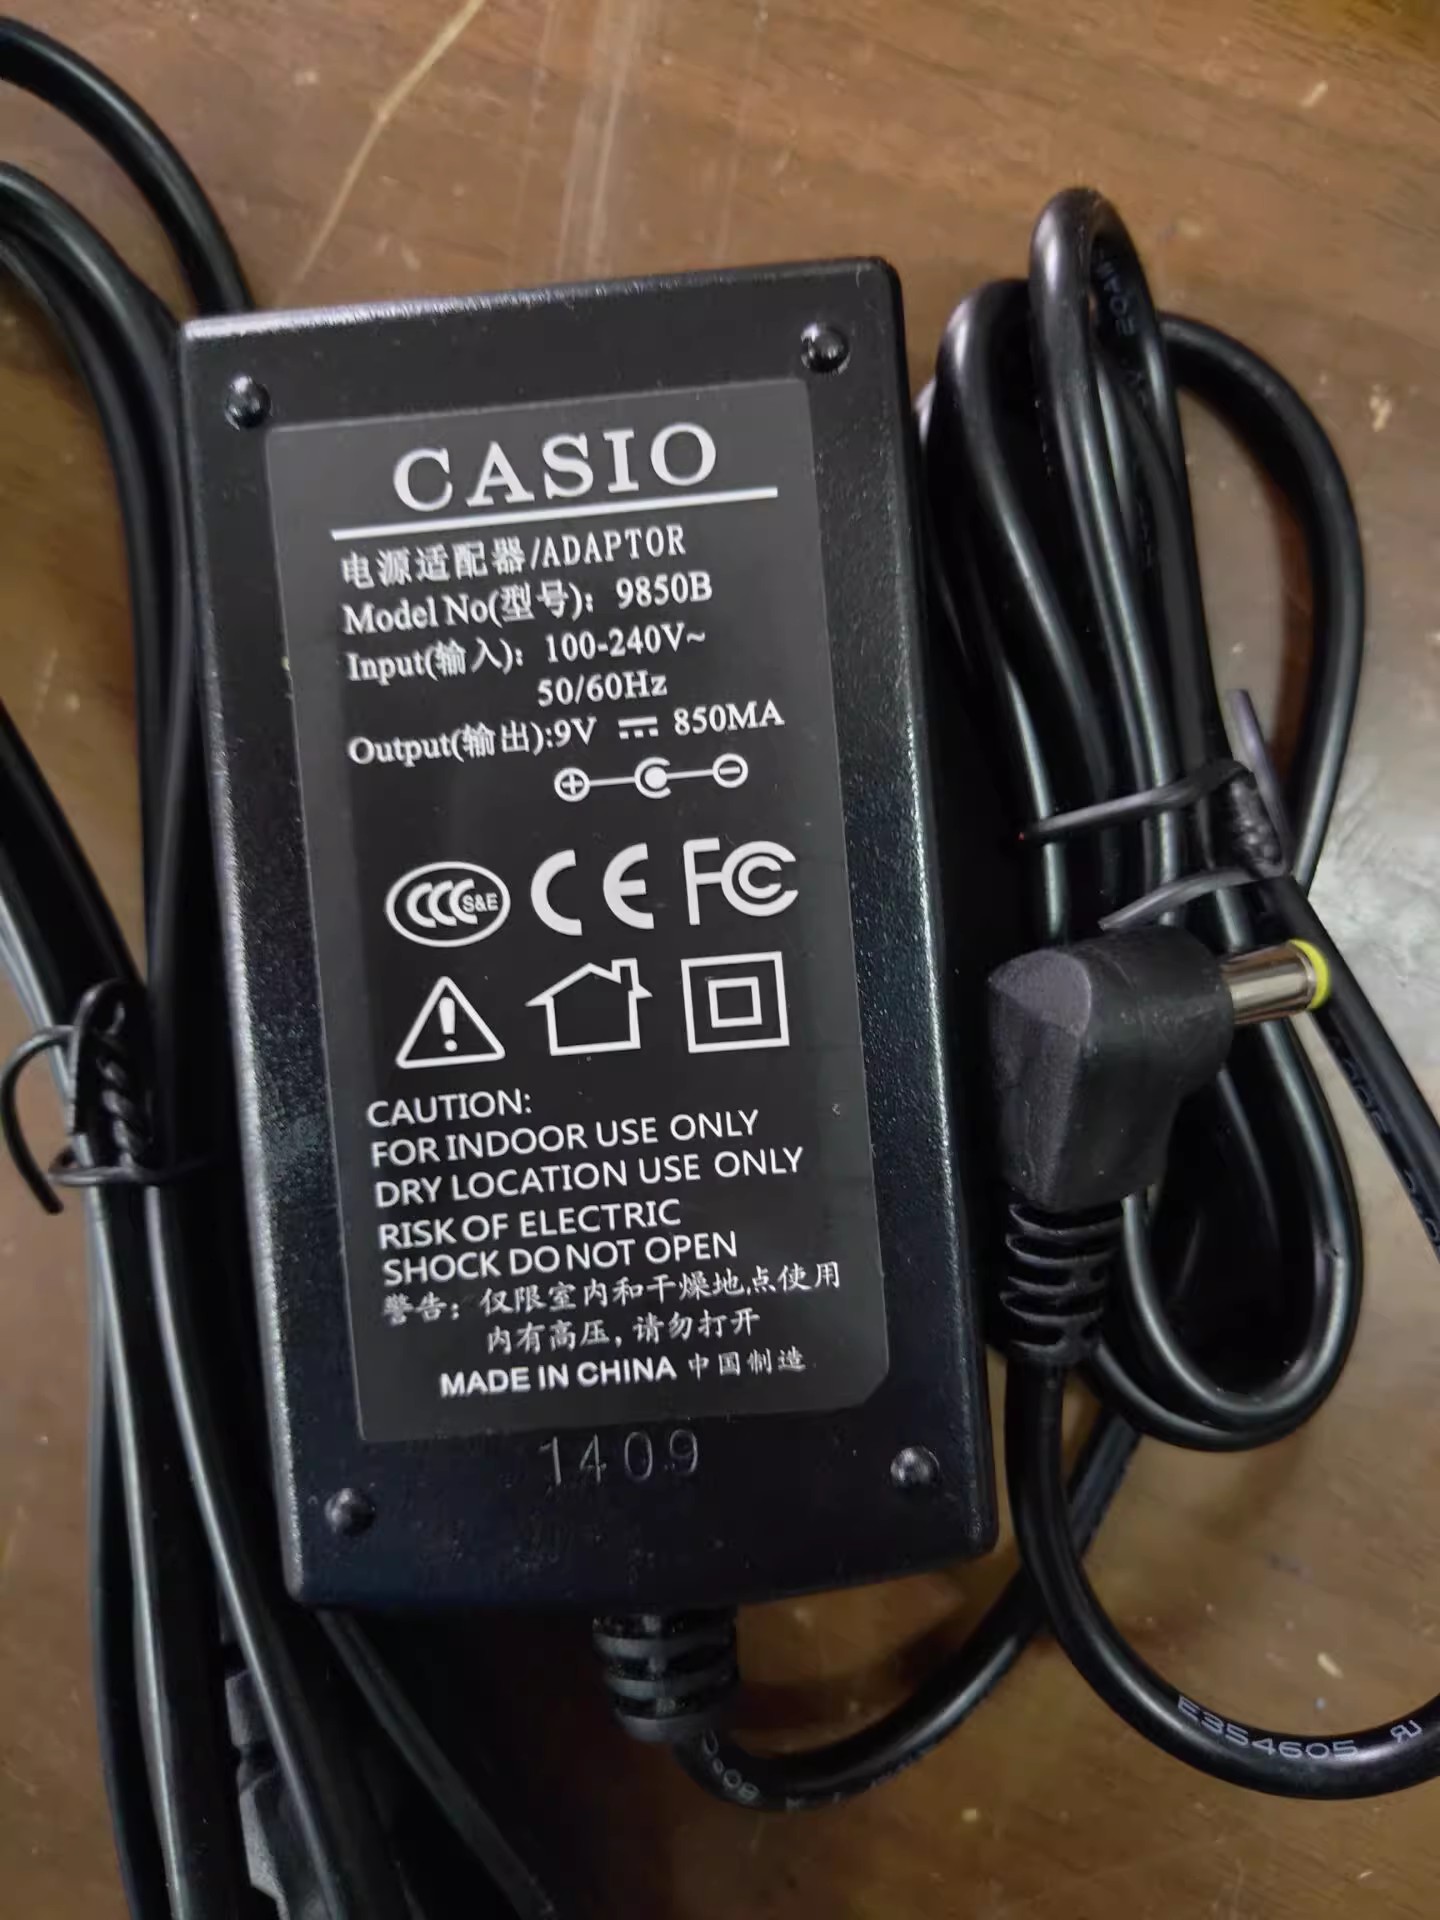 *Brand NEW* CASIO ctk-500 510 550 588 599 9850B 9V 850MA AC ADAPTER POWER Supply